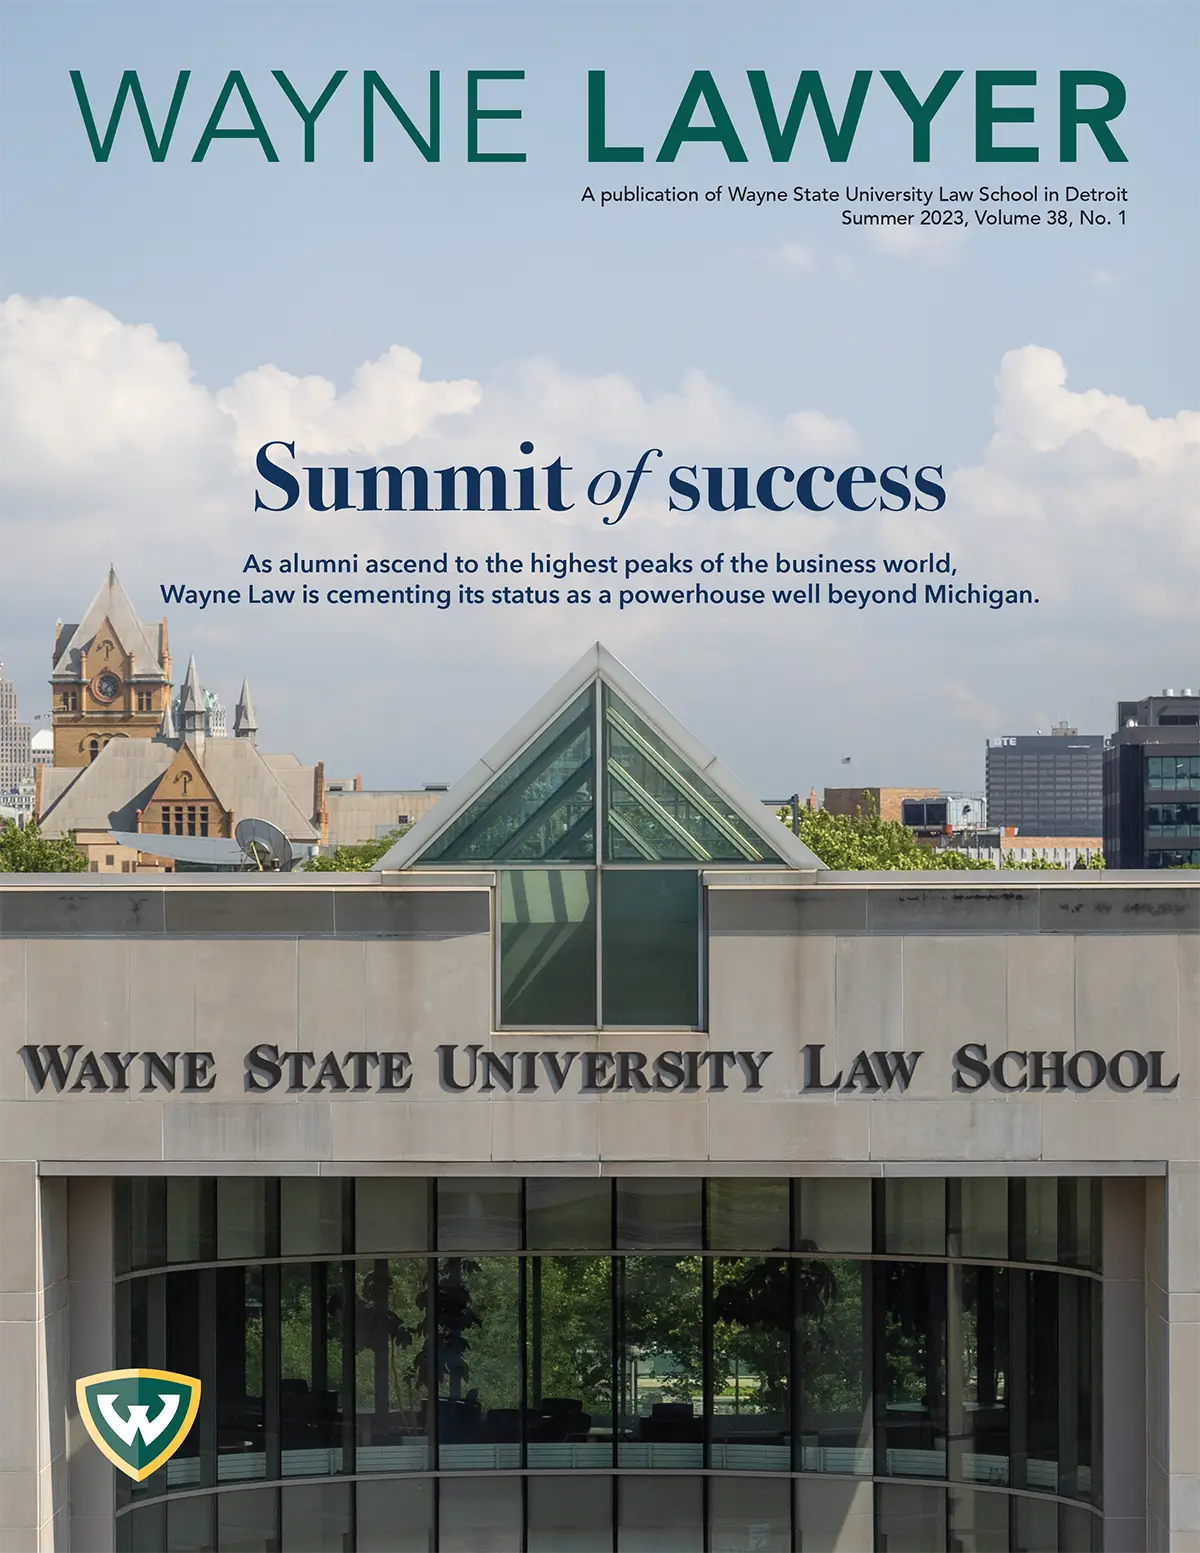 Wayne Lawyer Summer 2023 cover